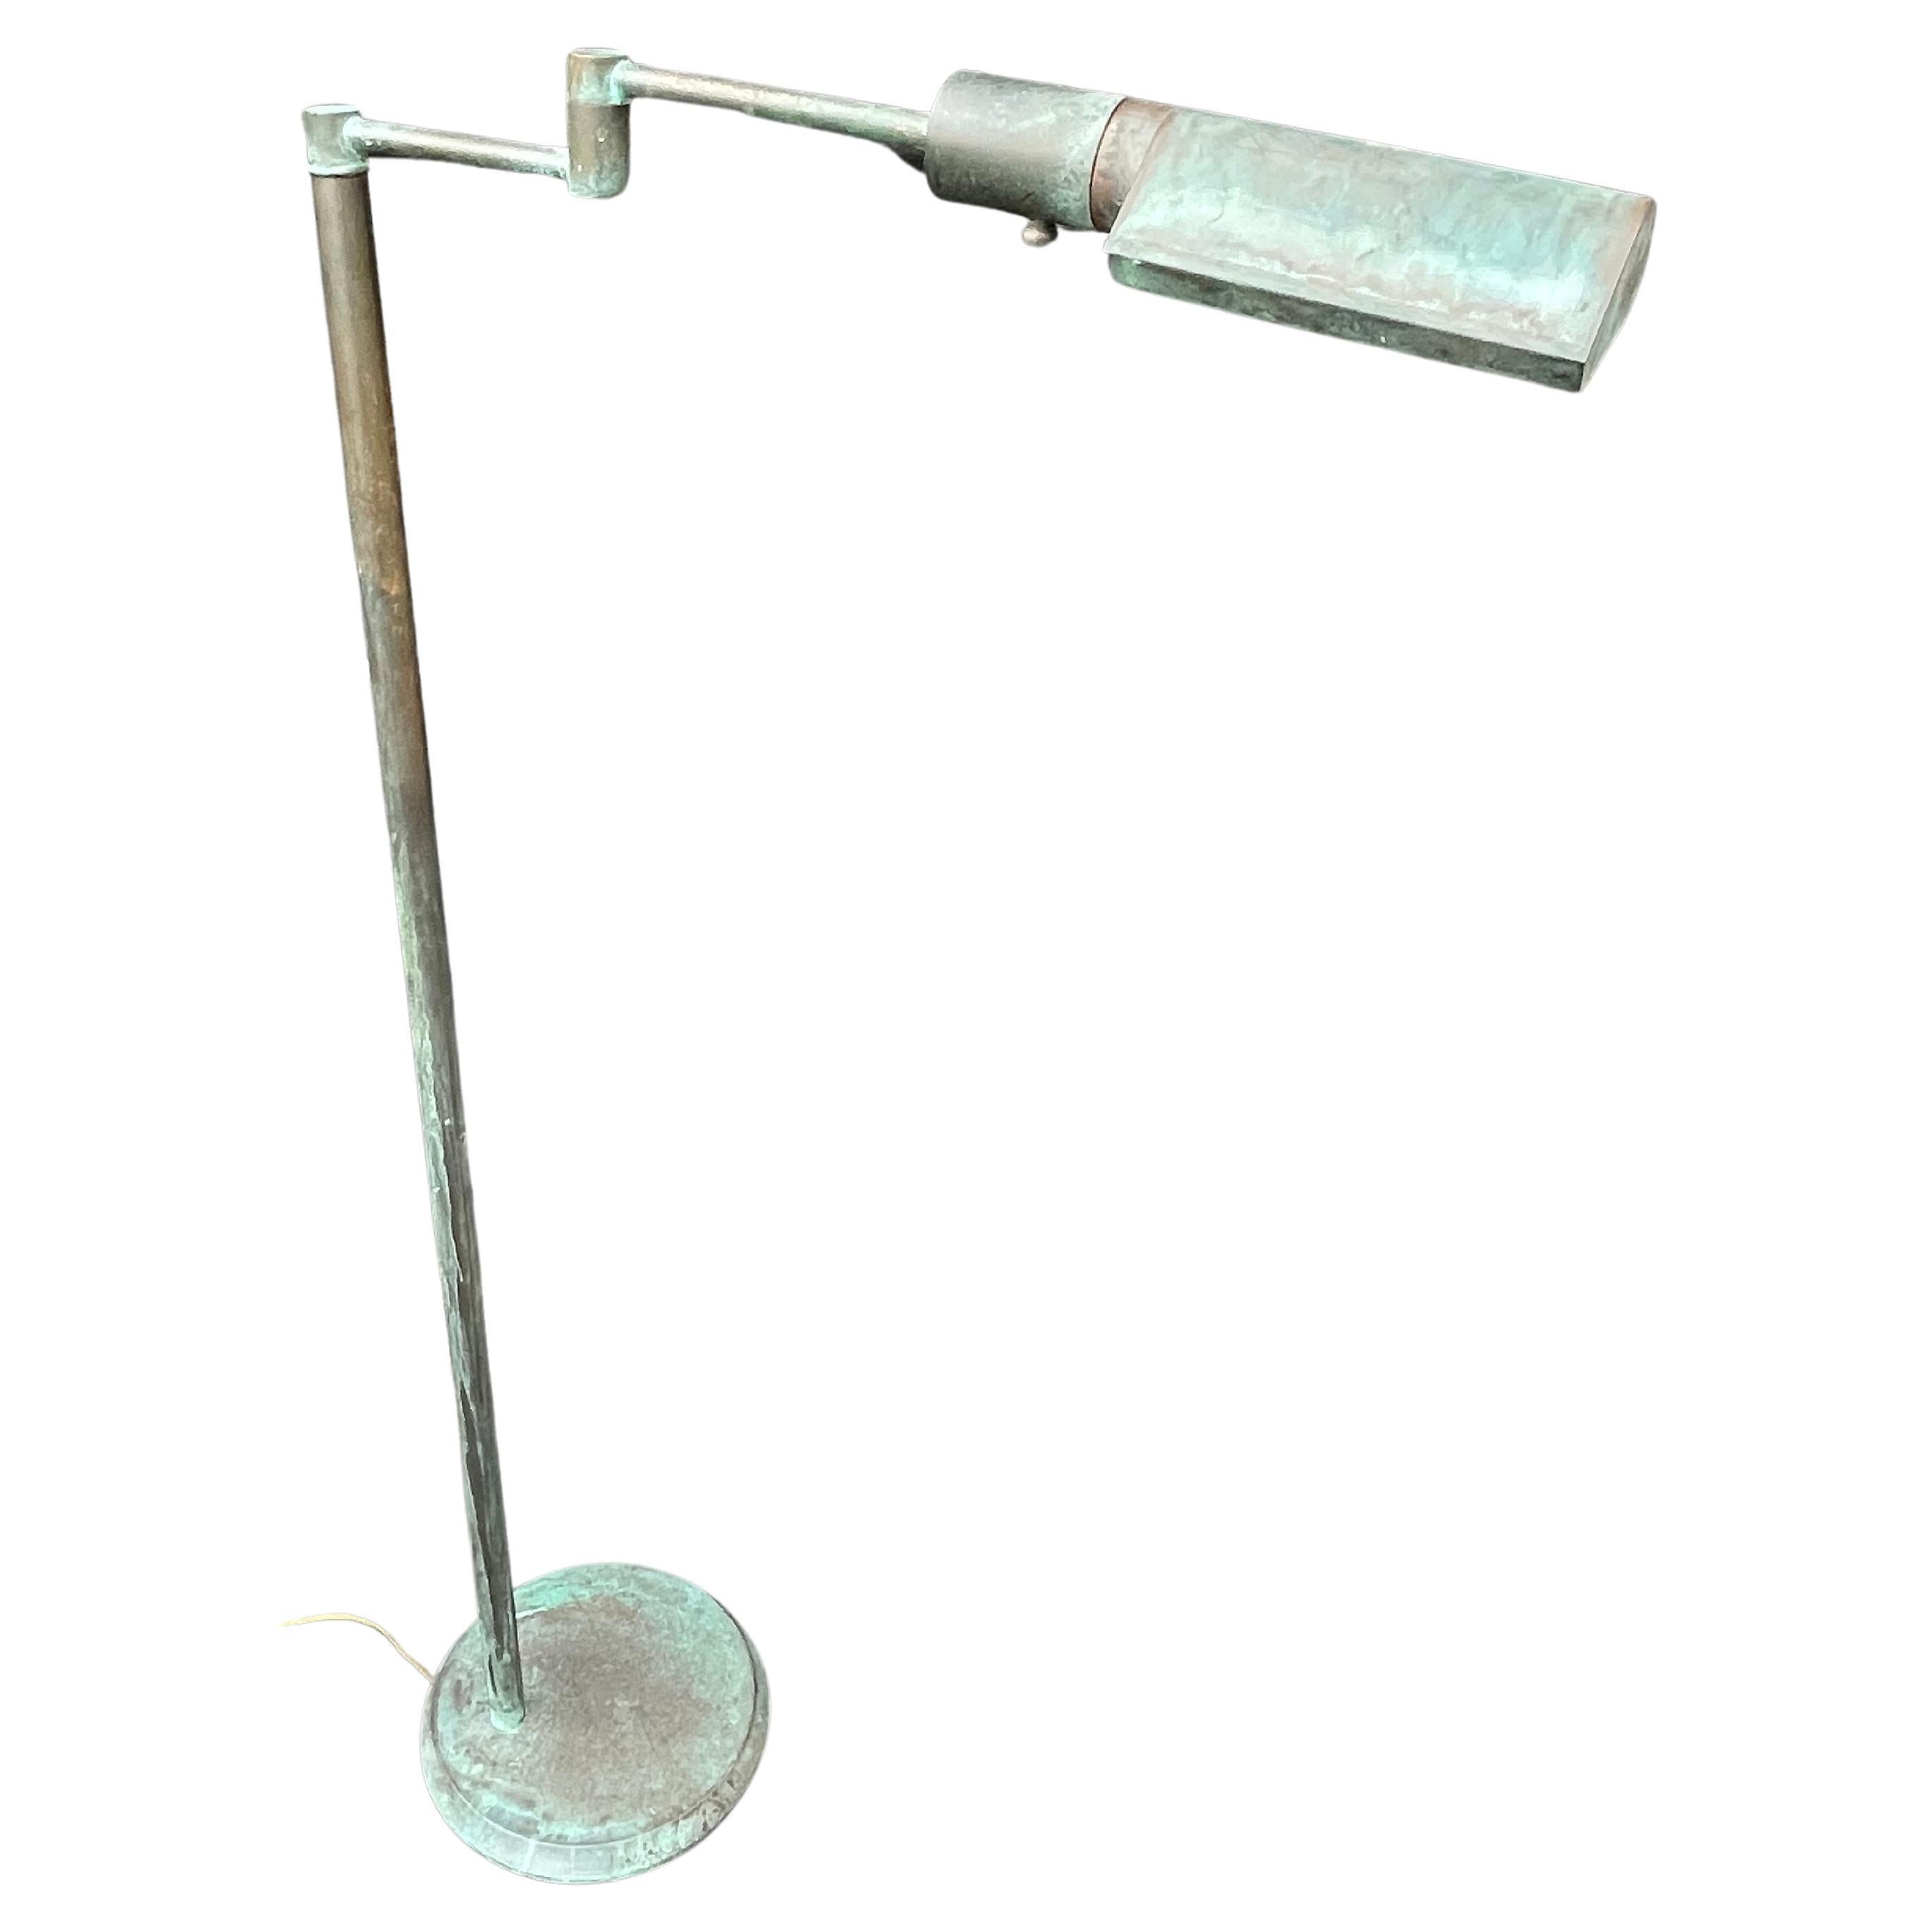 J.H. Lighting Oxidized Copper Swing Arm Floor Lamp